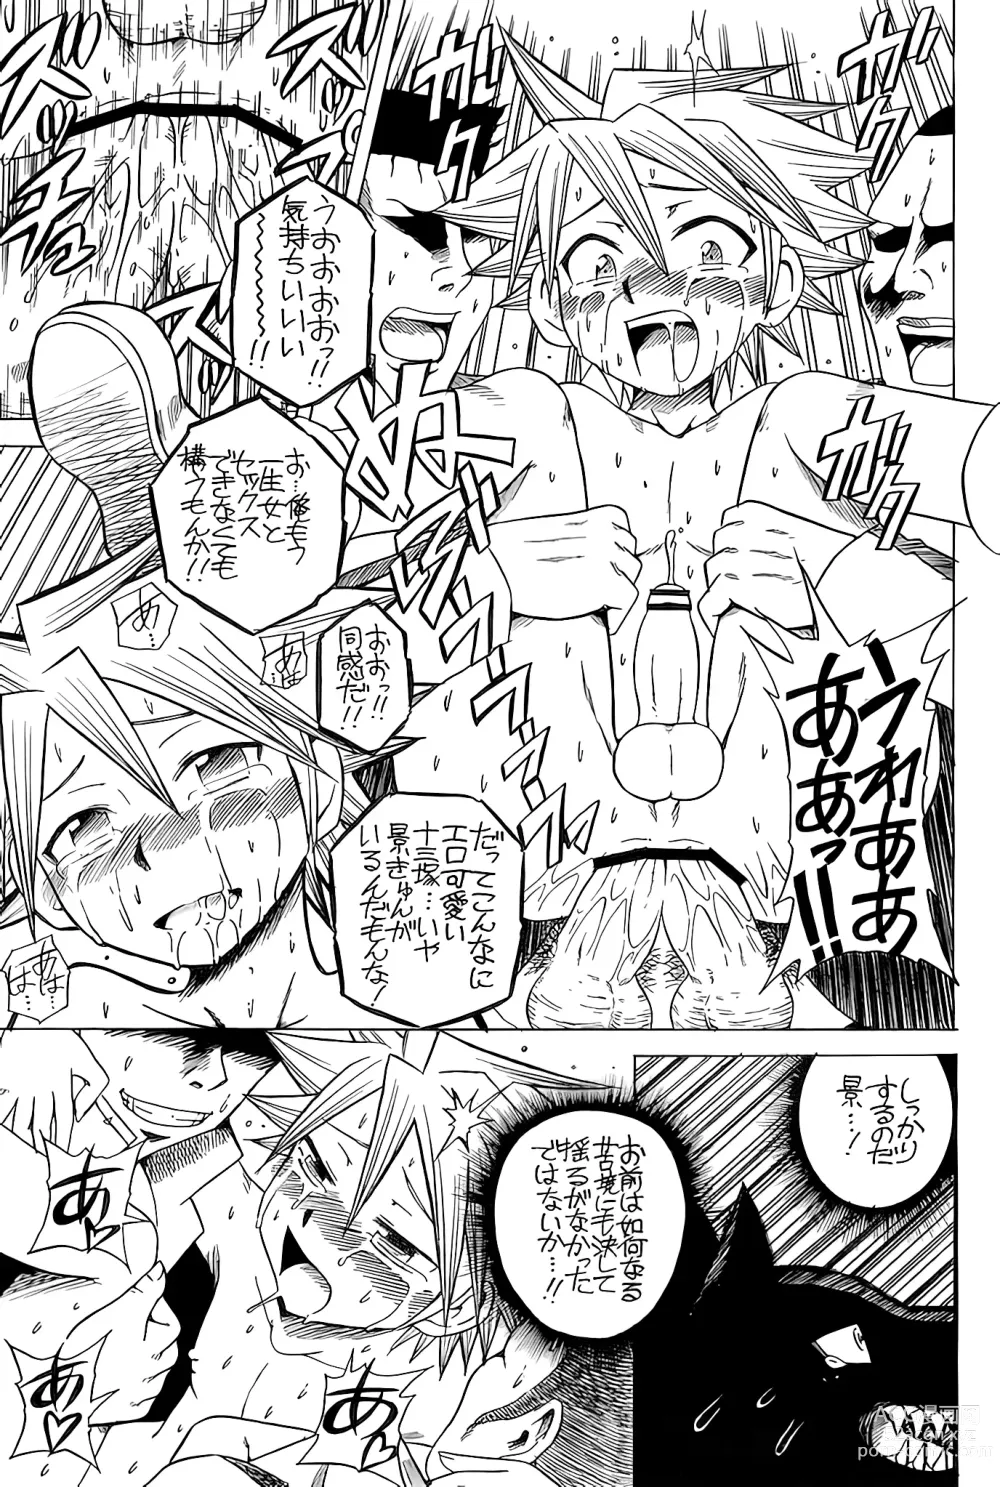 Page 20 of doujinshi Hakamori Breaker